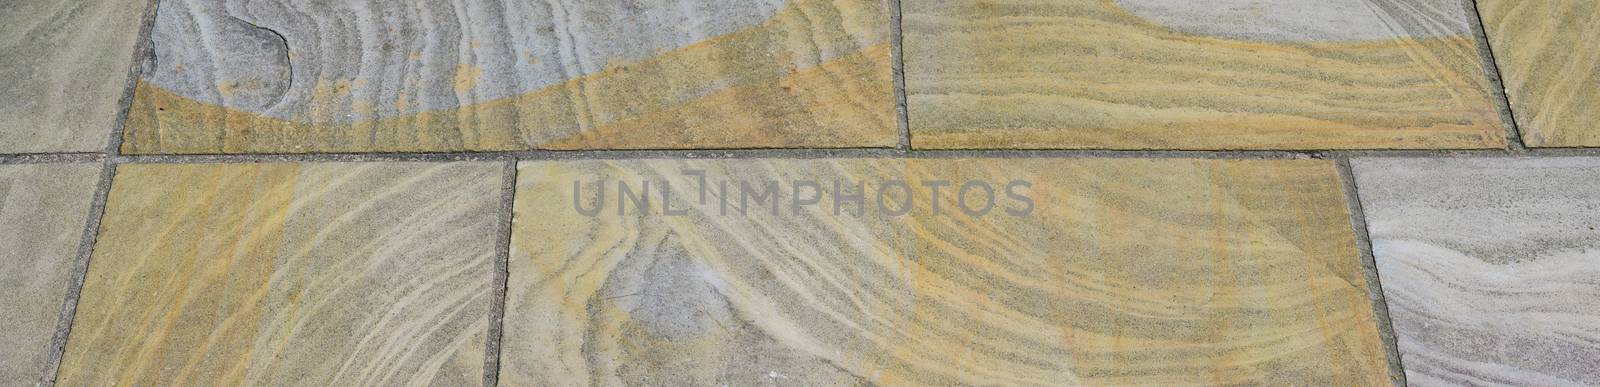 Panorama Brown ceramic floor tiles closeup texture by paddythegolfer